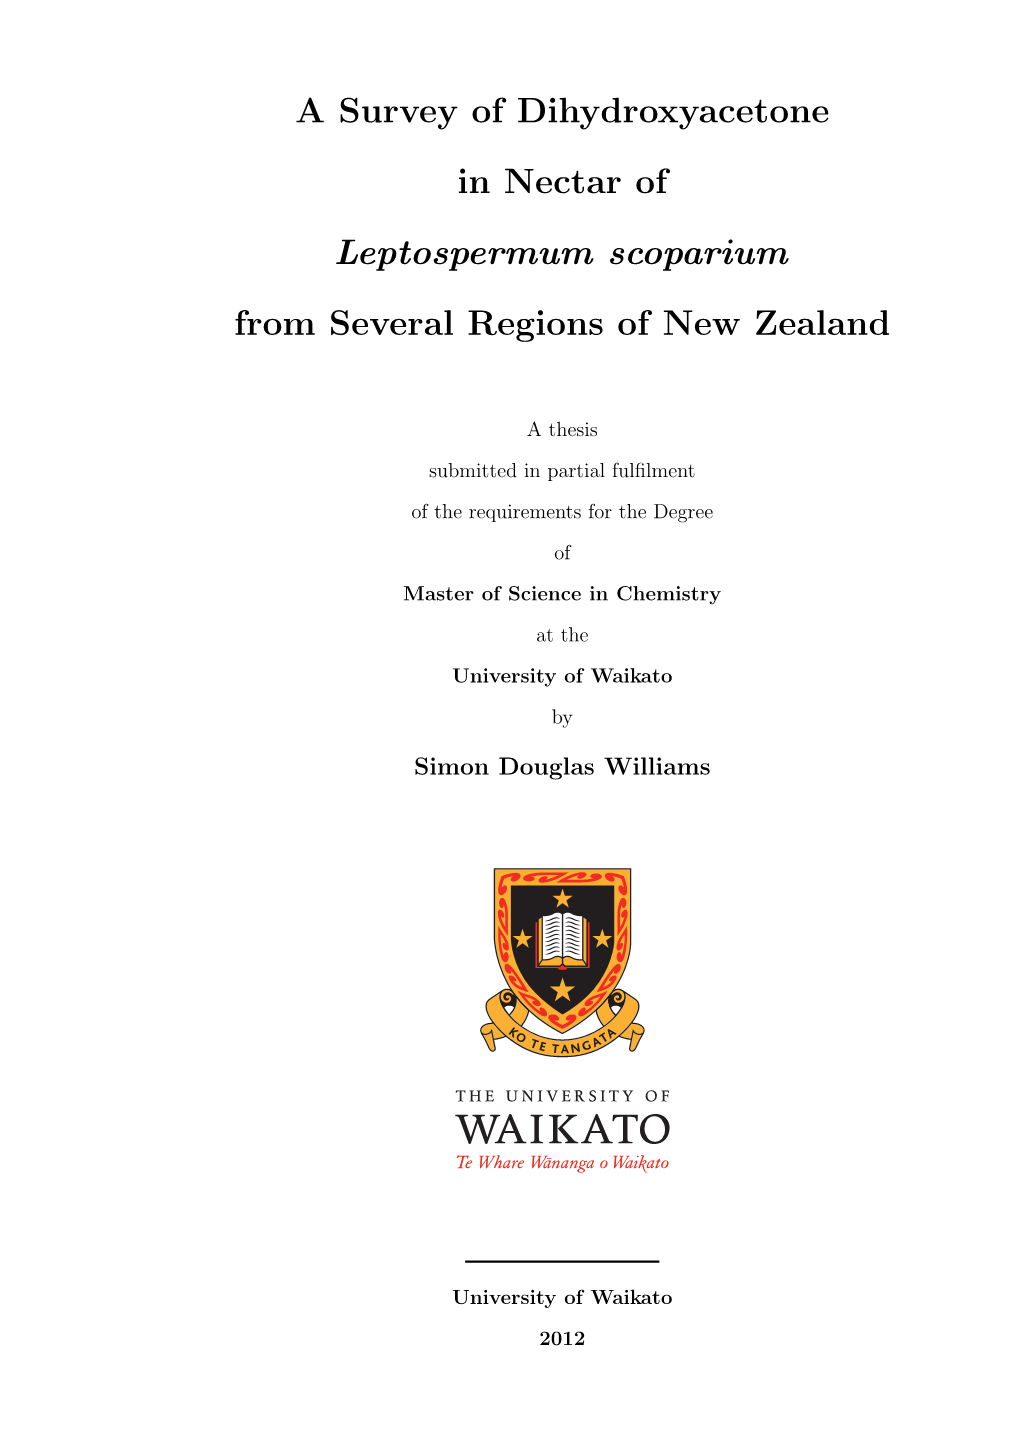 A Survey of Dihydroxyacetone in Nectar of Leptospermum Scoparium